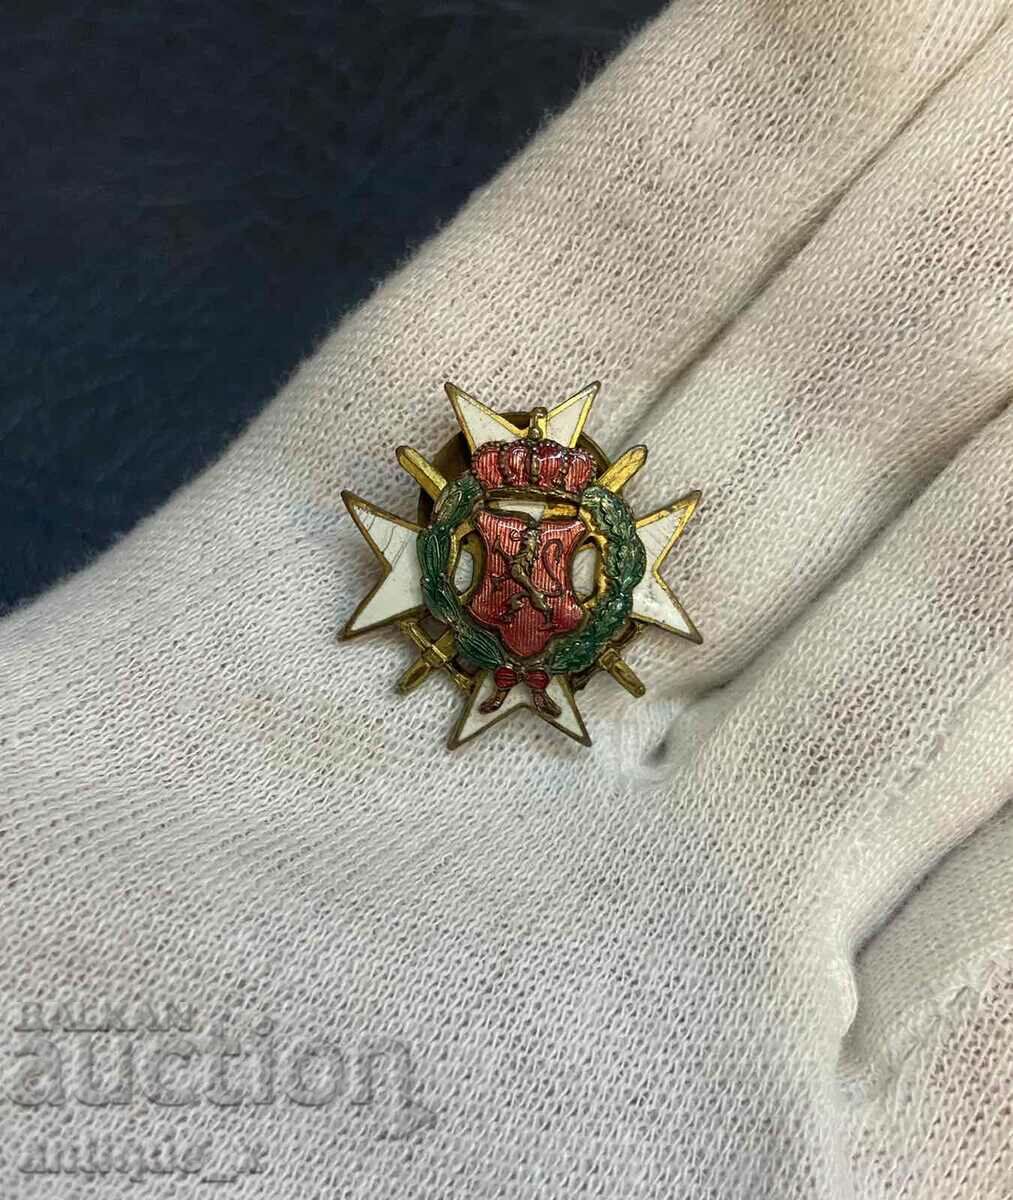 Rare Royal Military Enamel Badge - Reserve Officers Union